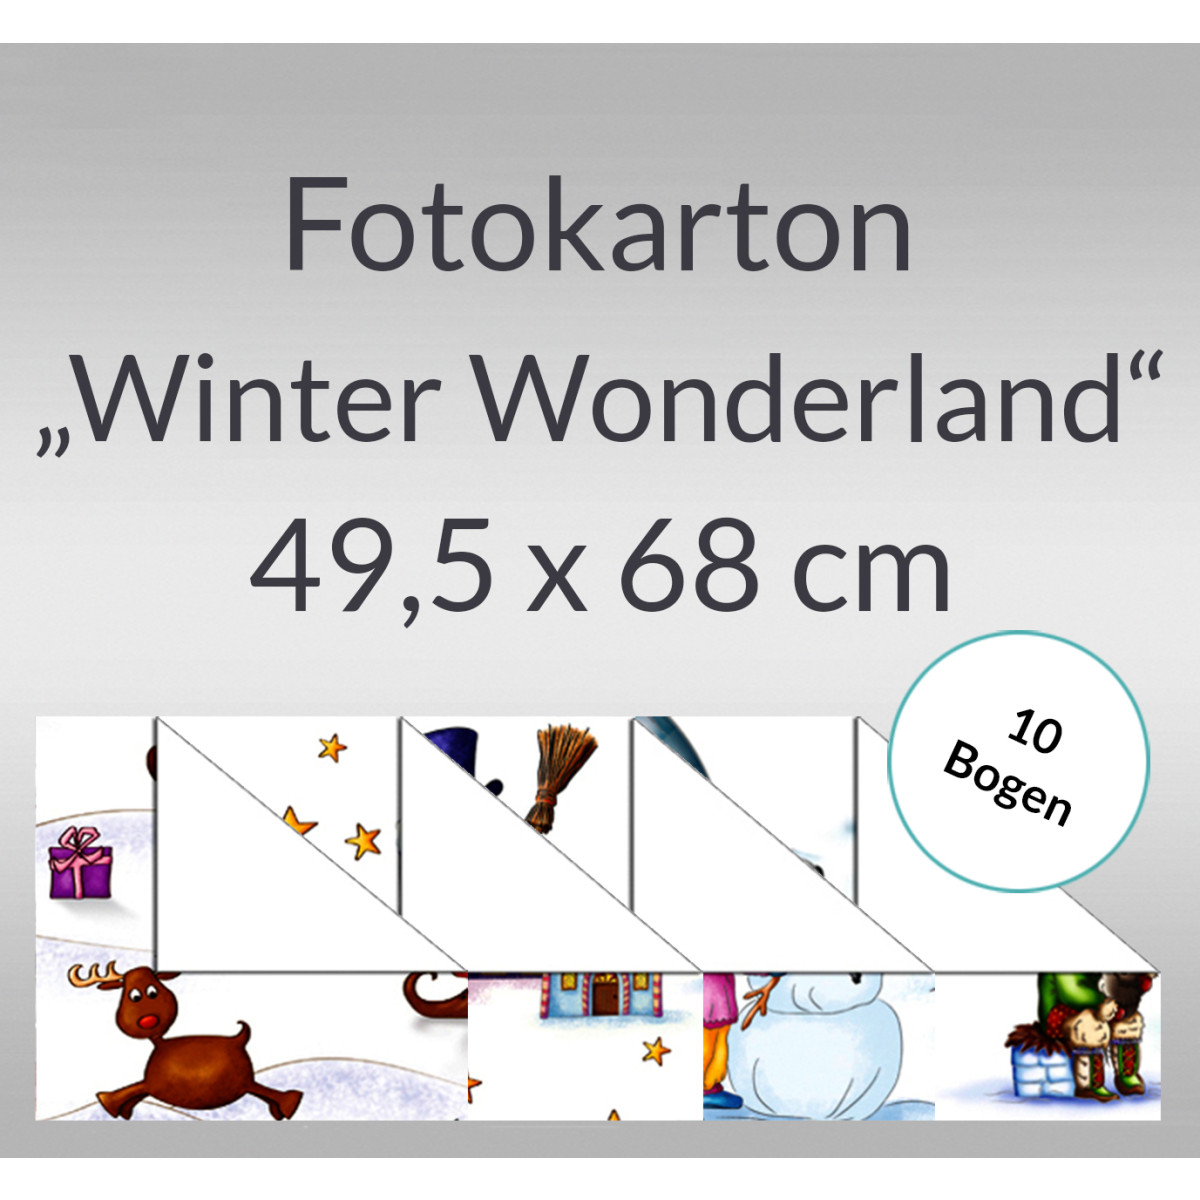 Fotokarton "Winter Wonderland" 49,5 x 68 cm - 10 Bogen